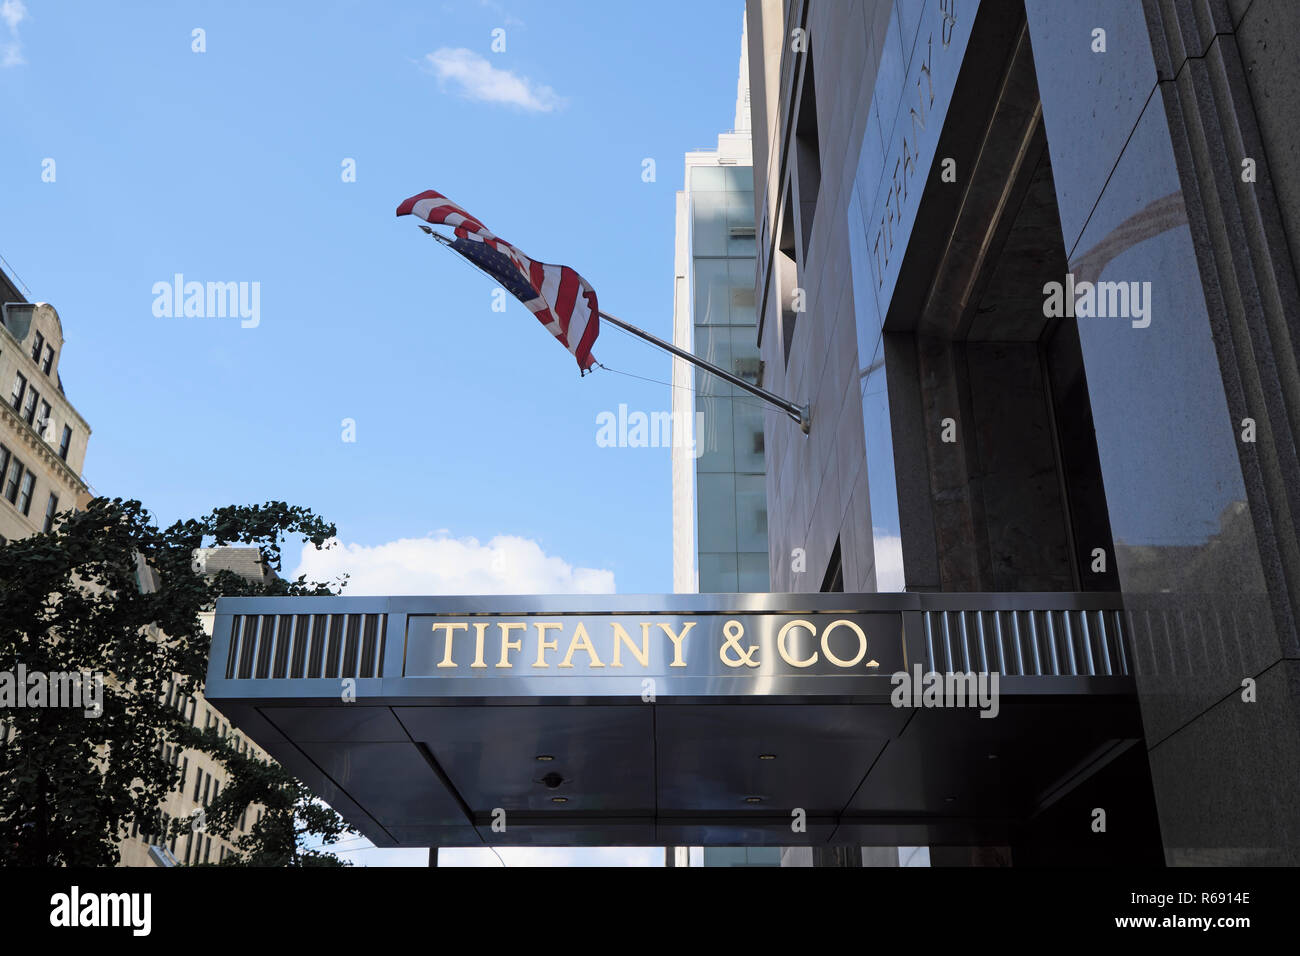 Tiffany & CO., Fifth avenue, New York, United States Stock Photo - Alamy